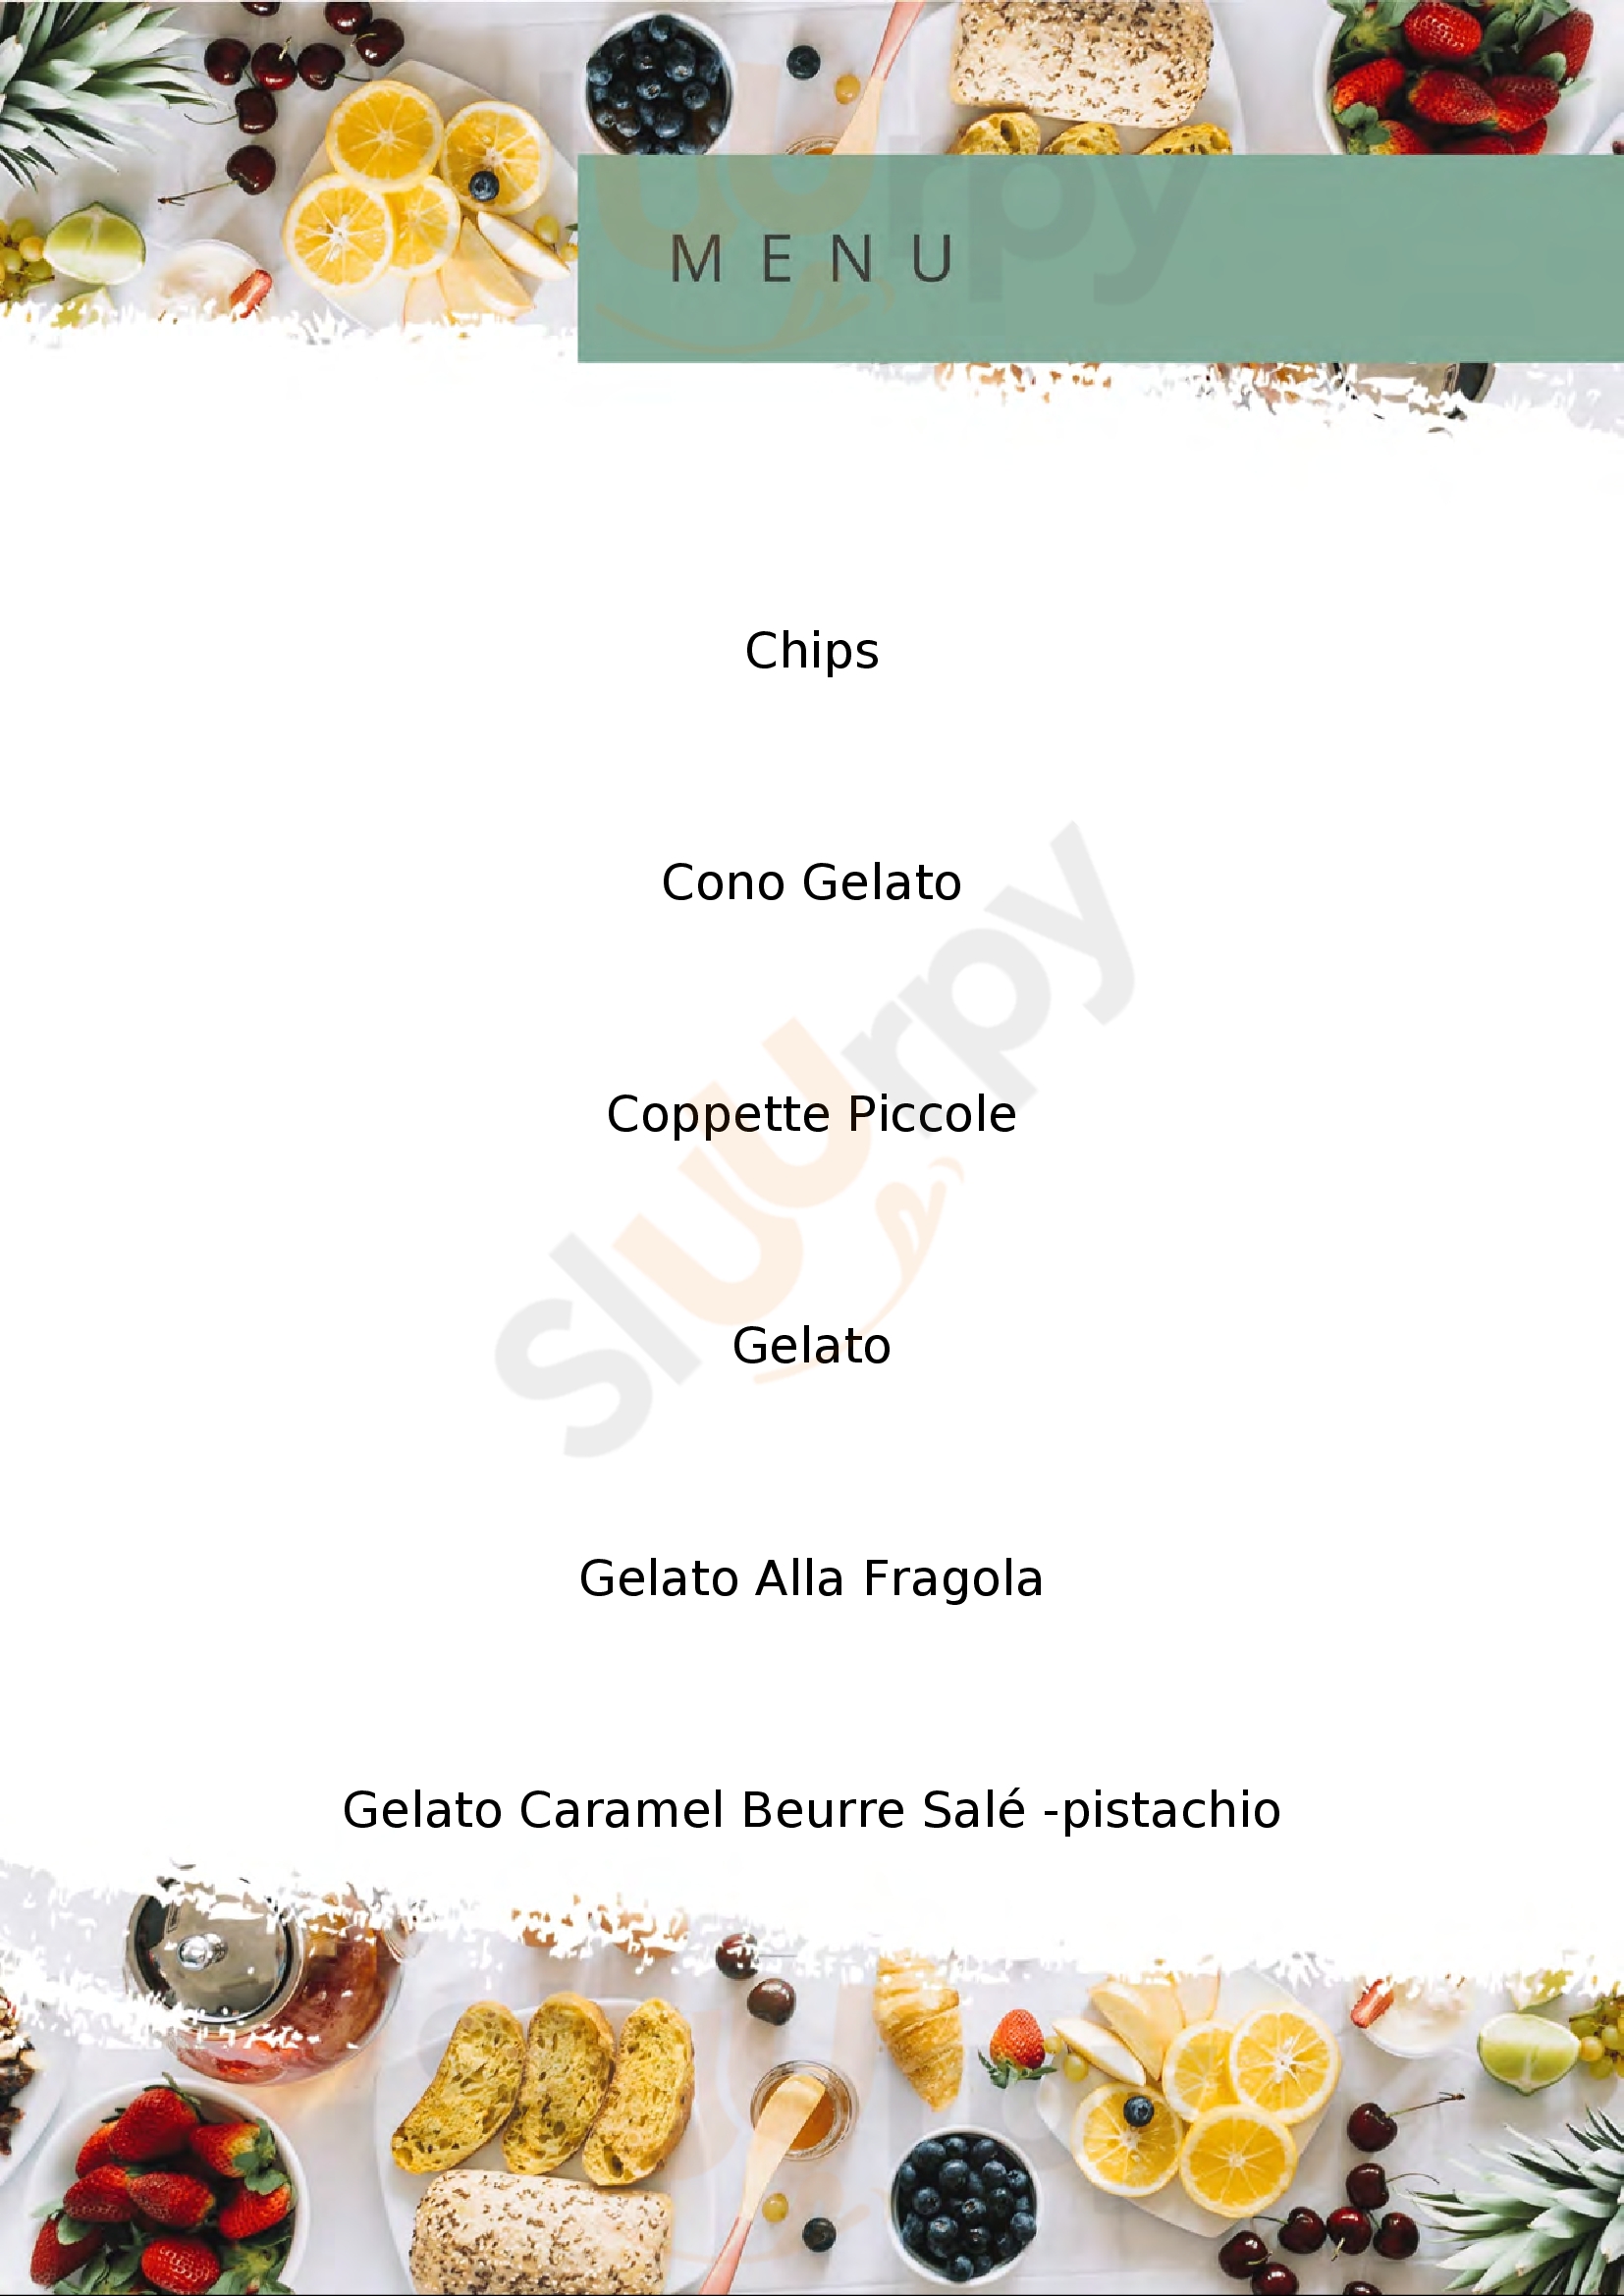 Papilla Chips Ravenna menù 1 pagina